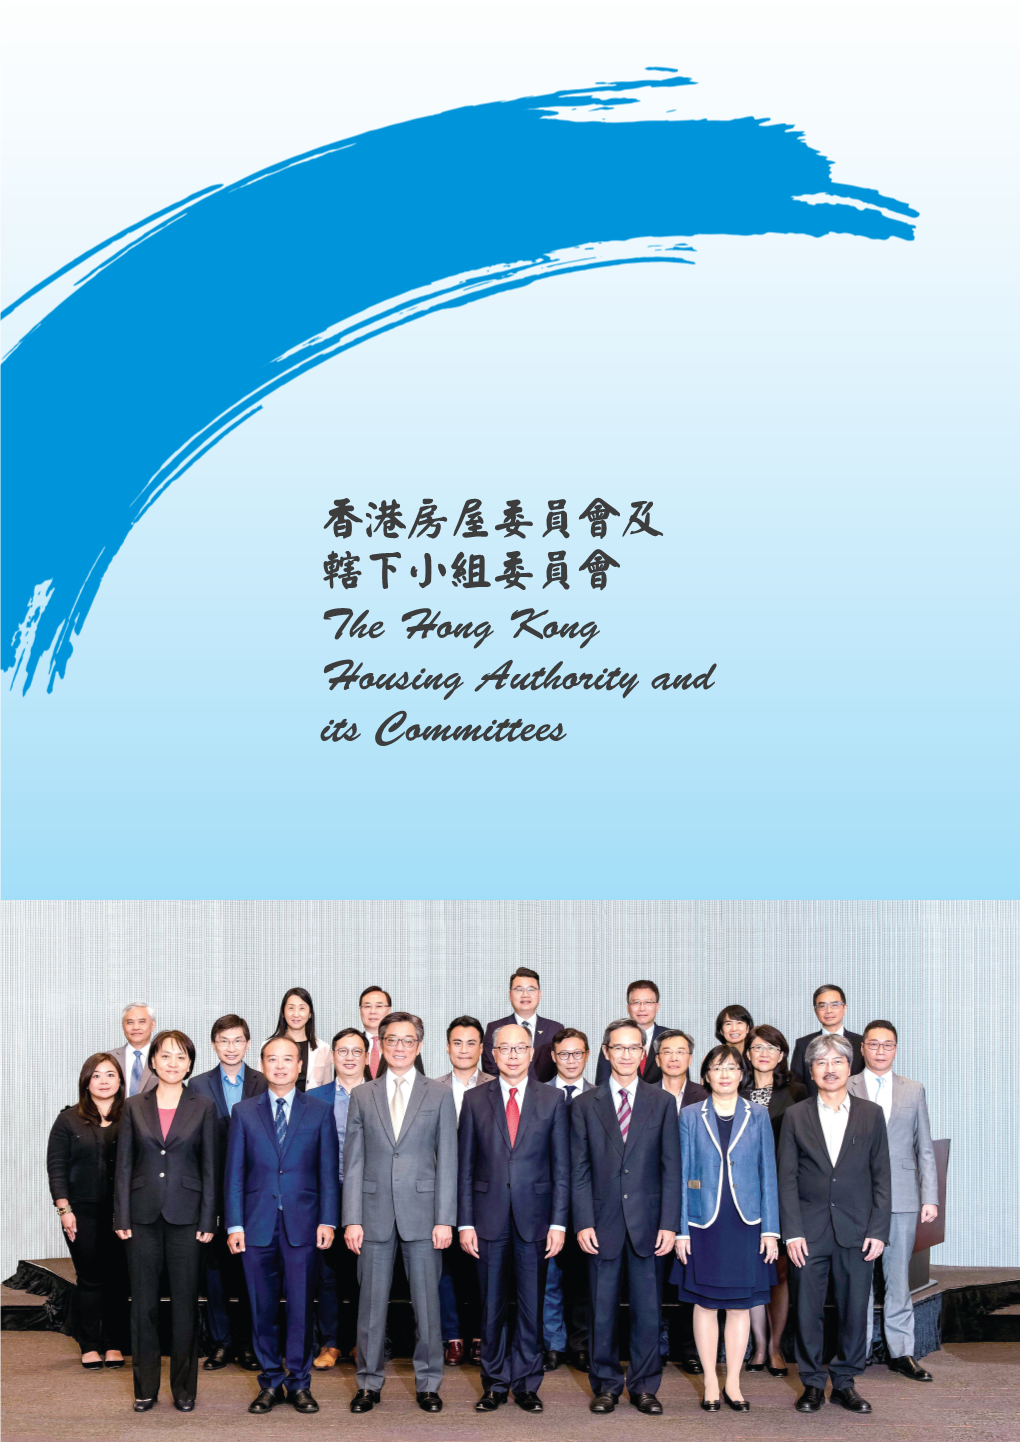 香港房屋委員會及轄下小組委員會the Hong Kong Housing Authority and Its Committees